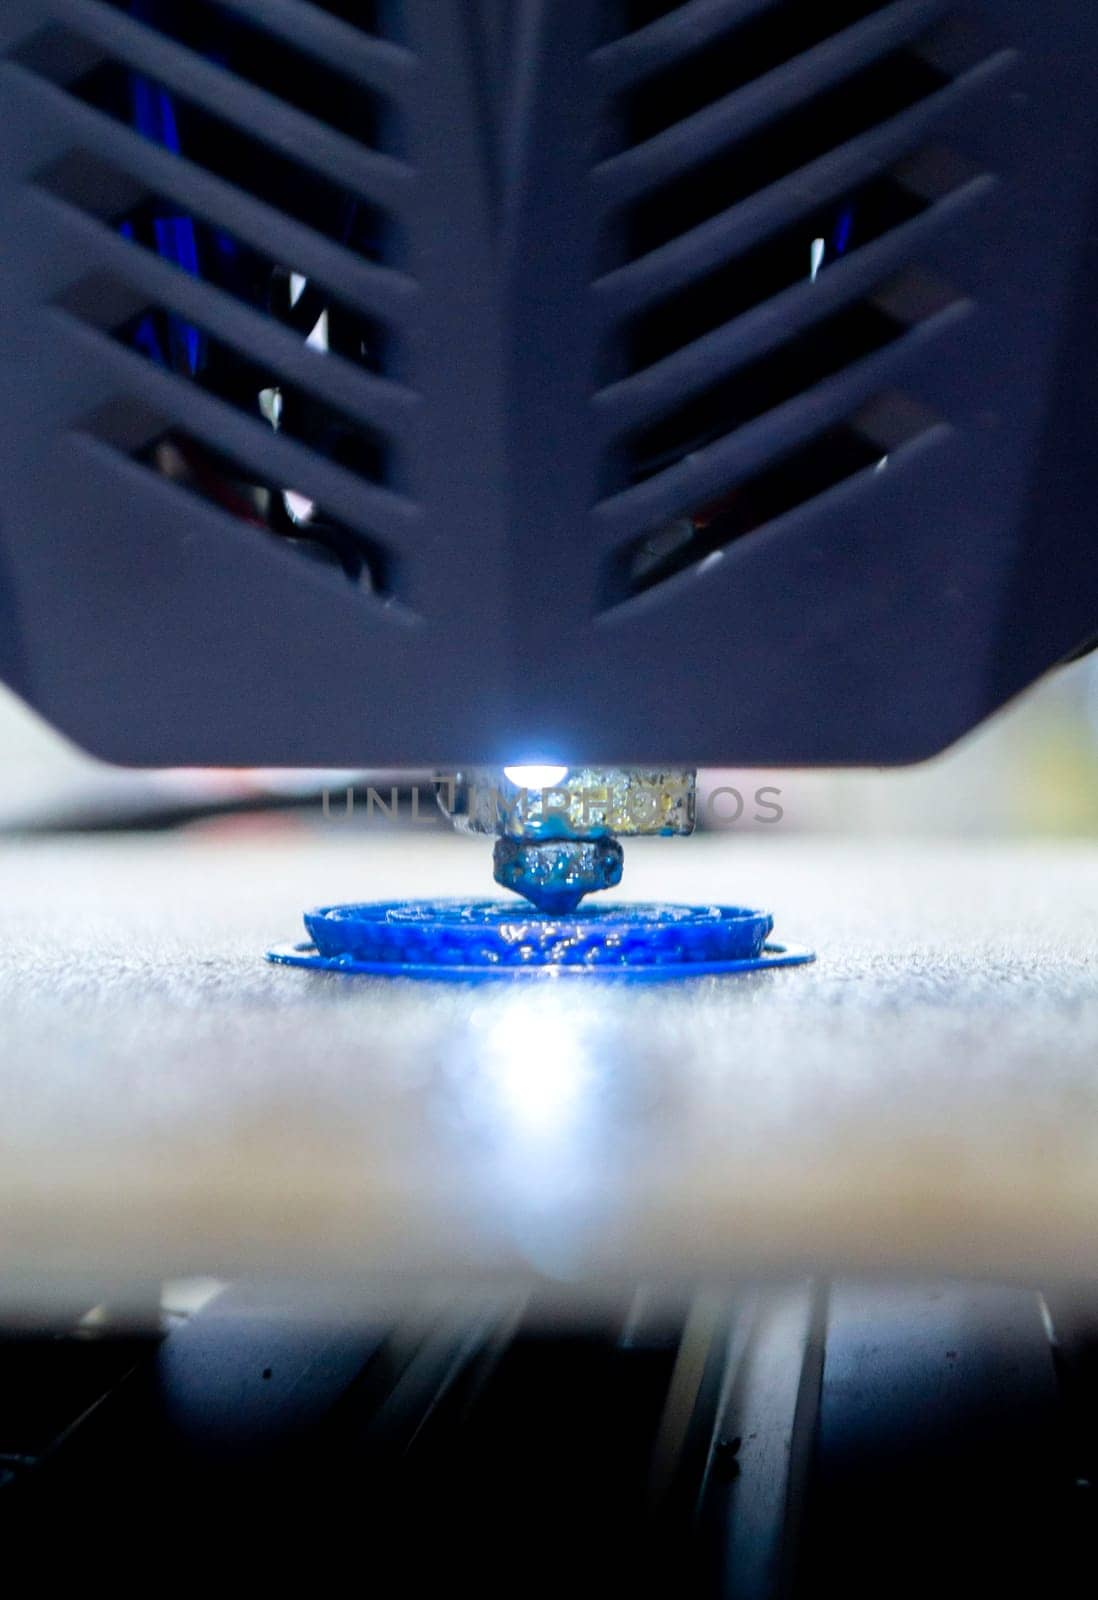 Working 3D printer printing blue plastic object. Printing model molten plastic by Mari1408